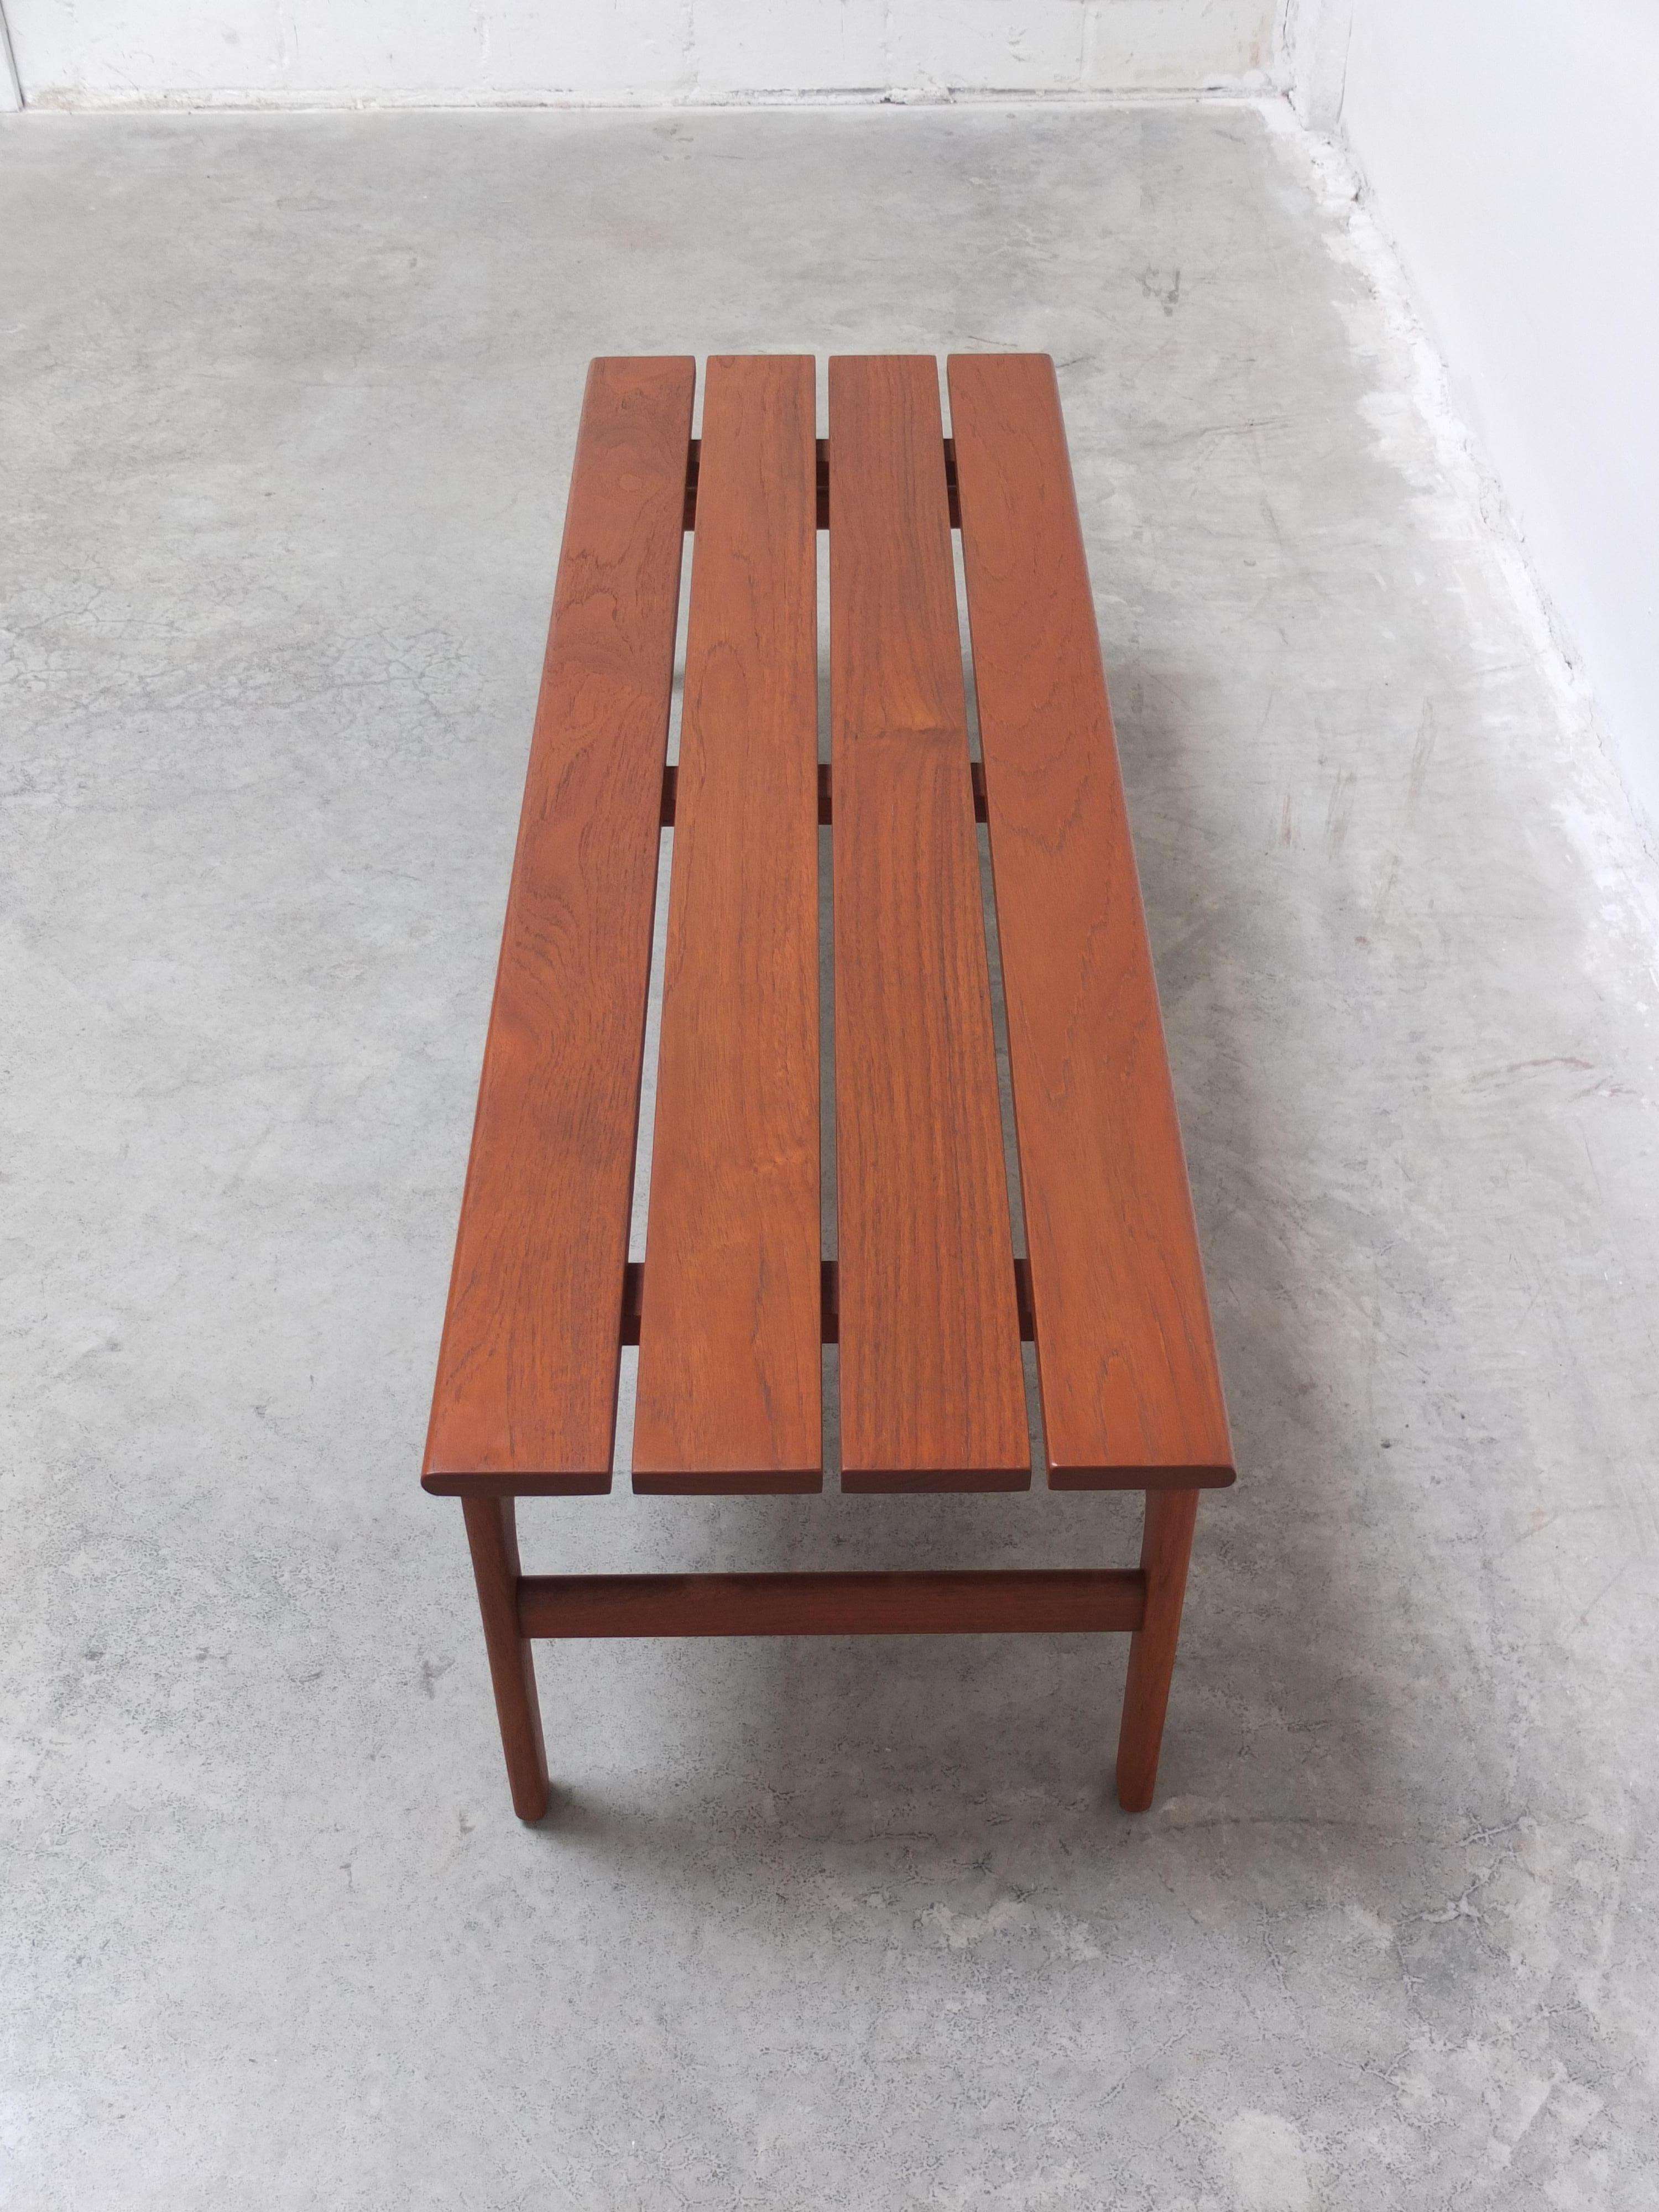 Teak Slatted Bench or Coffee Table by Yngvar Sandström for AB Sëffle, 1960s For Sale 2